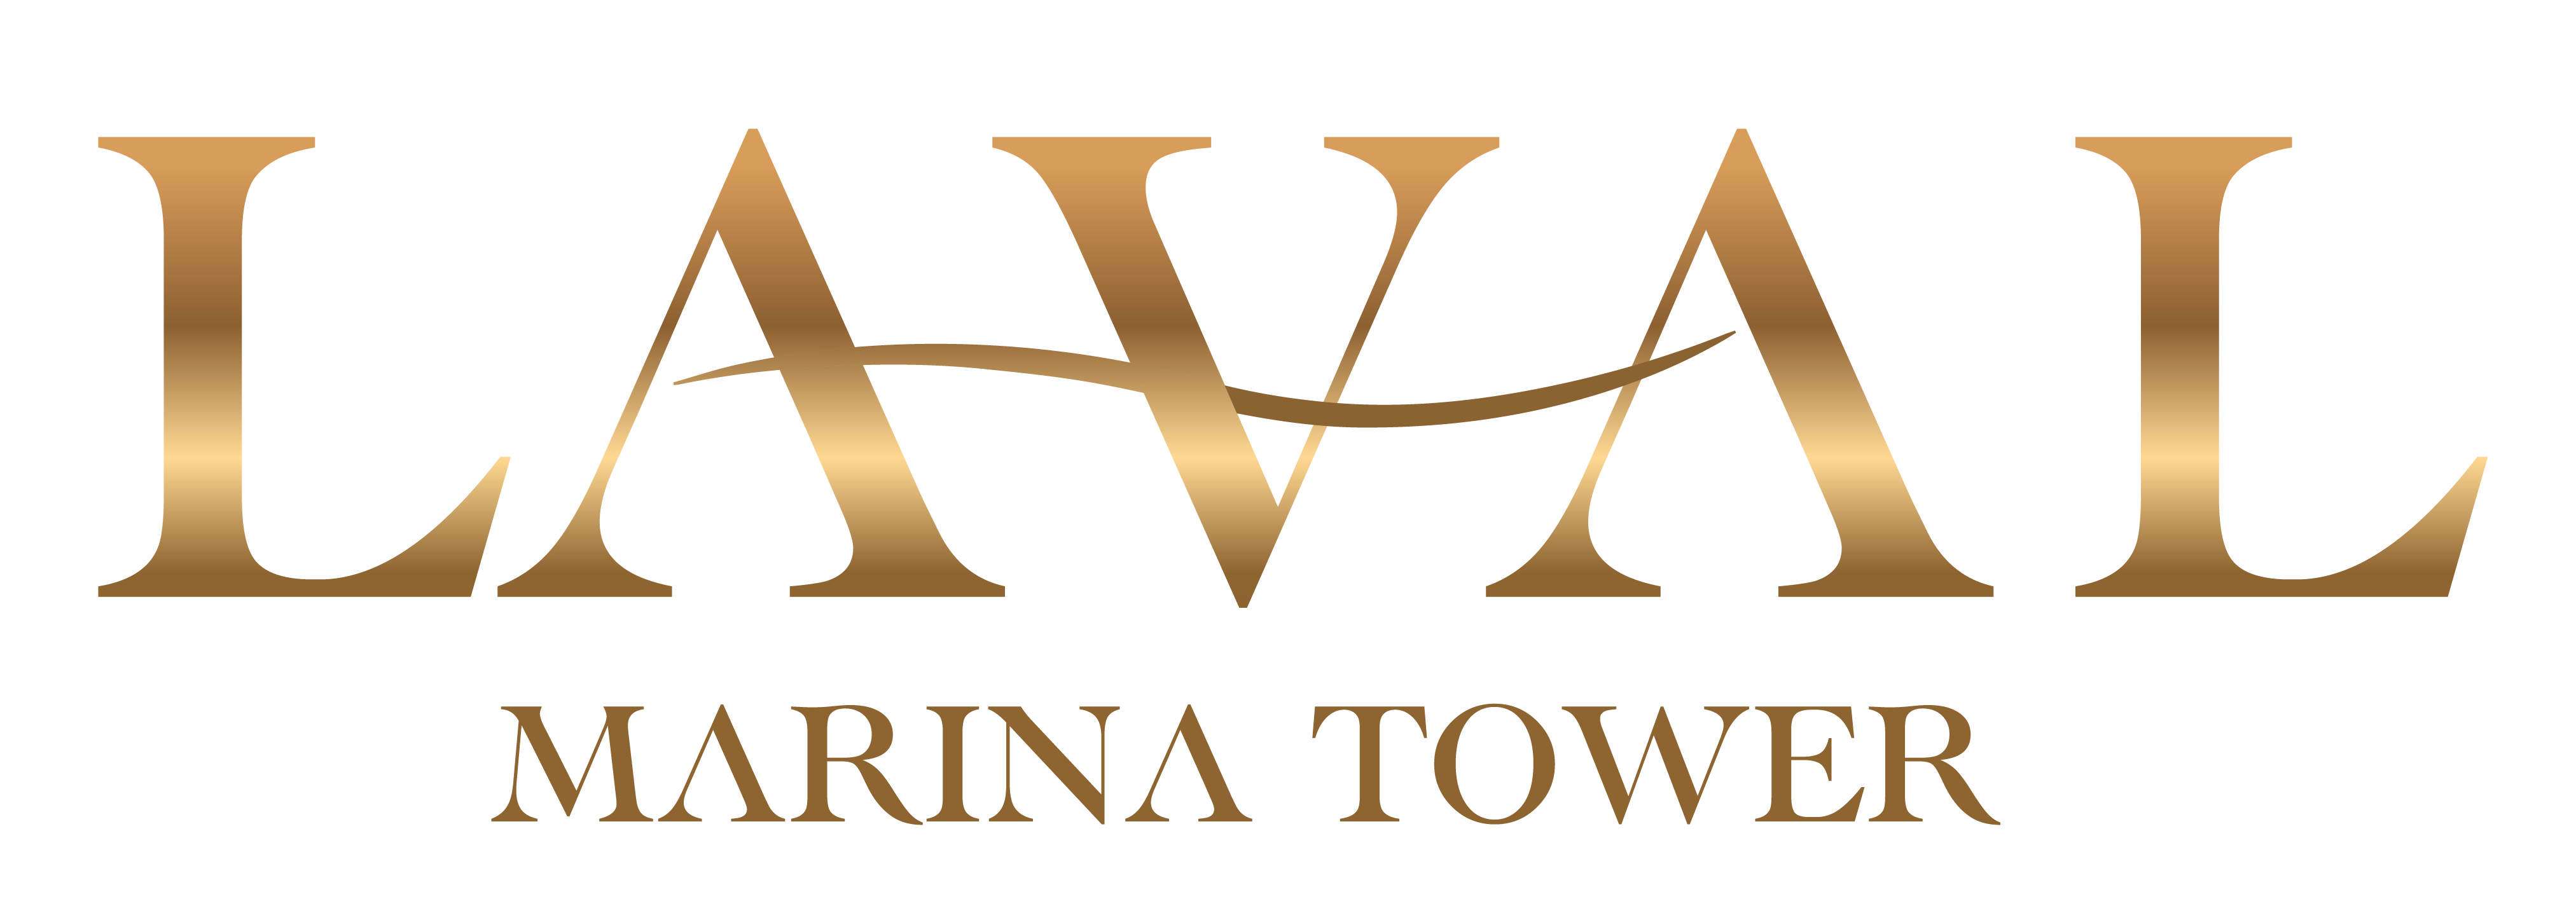 LAVAL Marina Tower